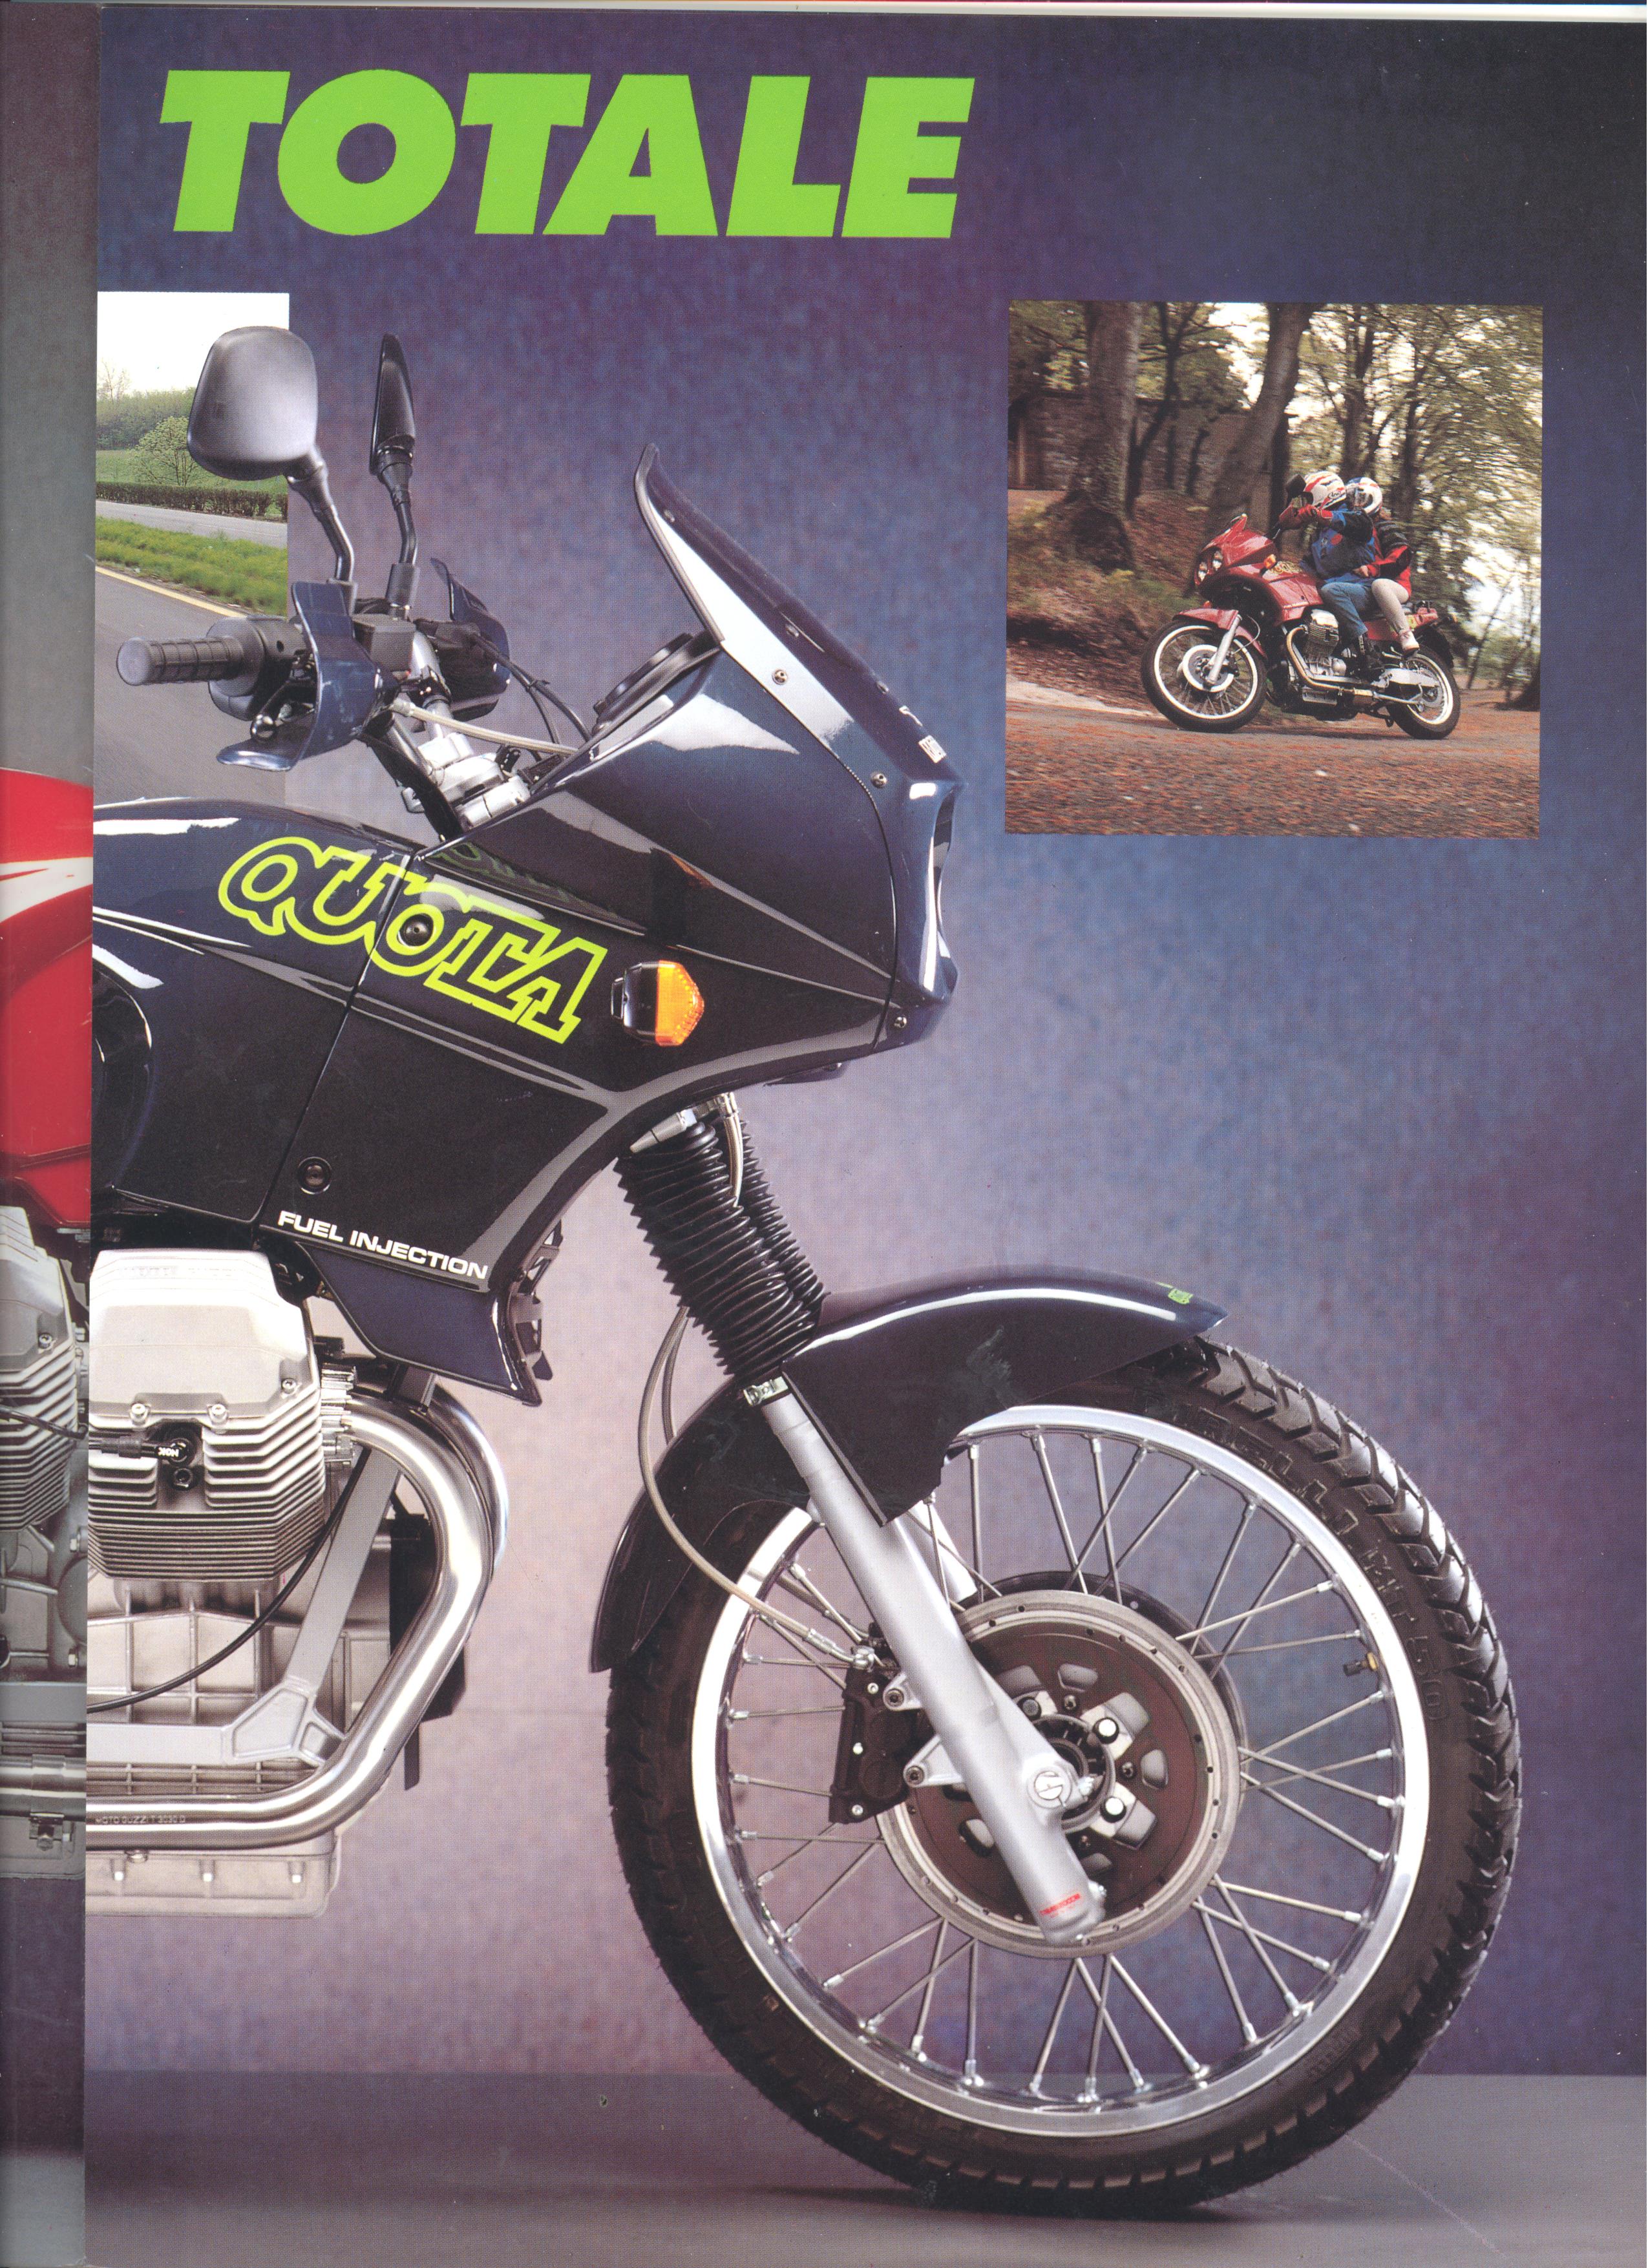 Moto Guzzi factory brochure: Quota 1000